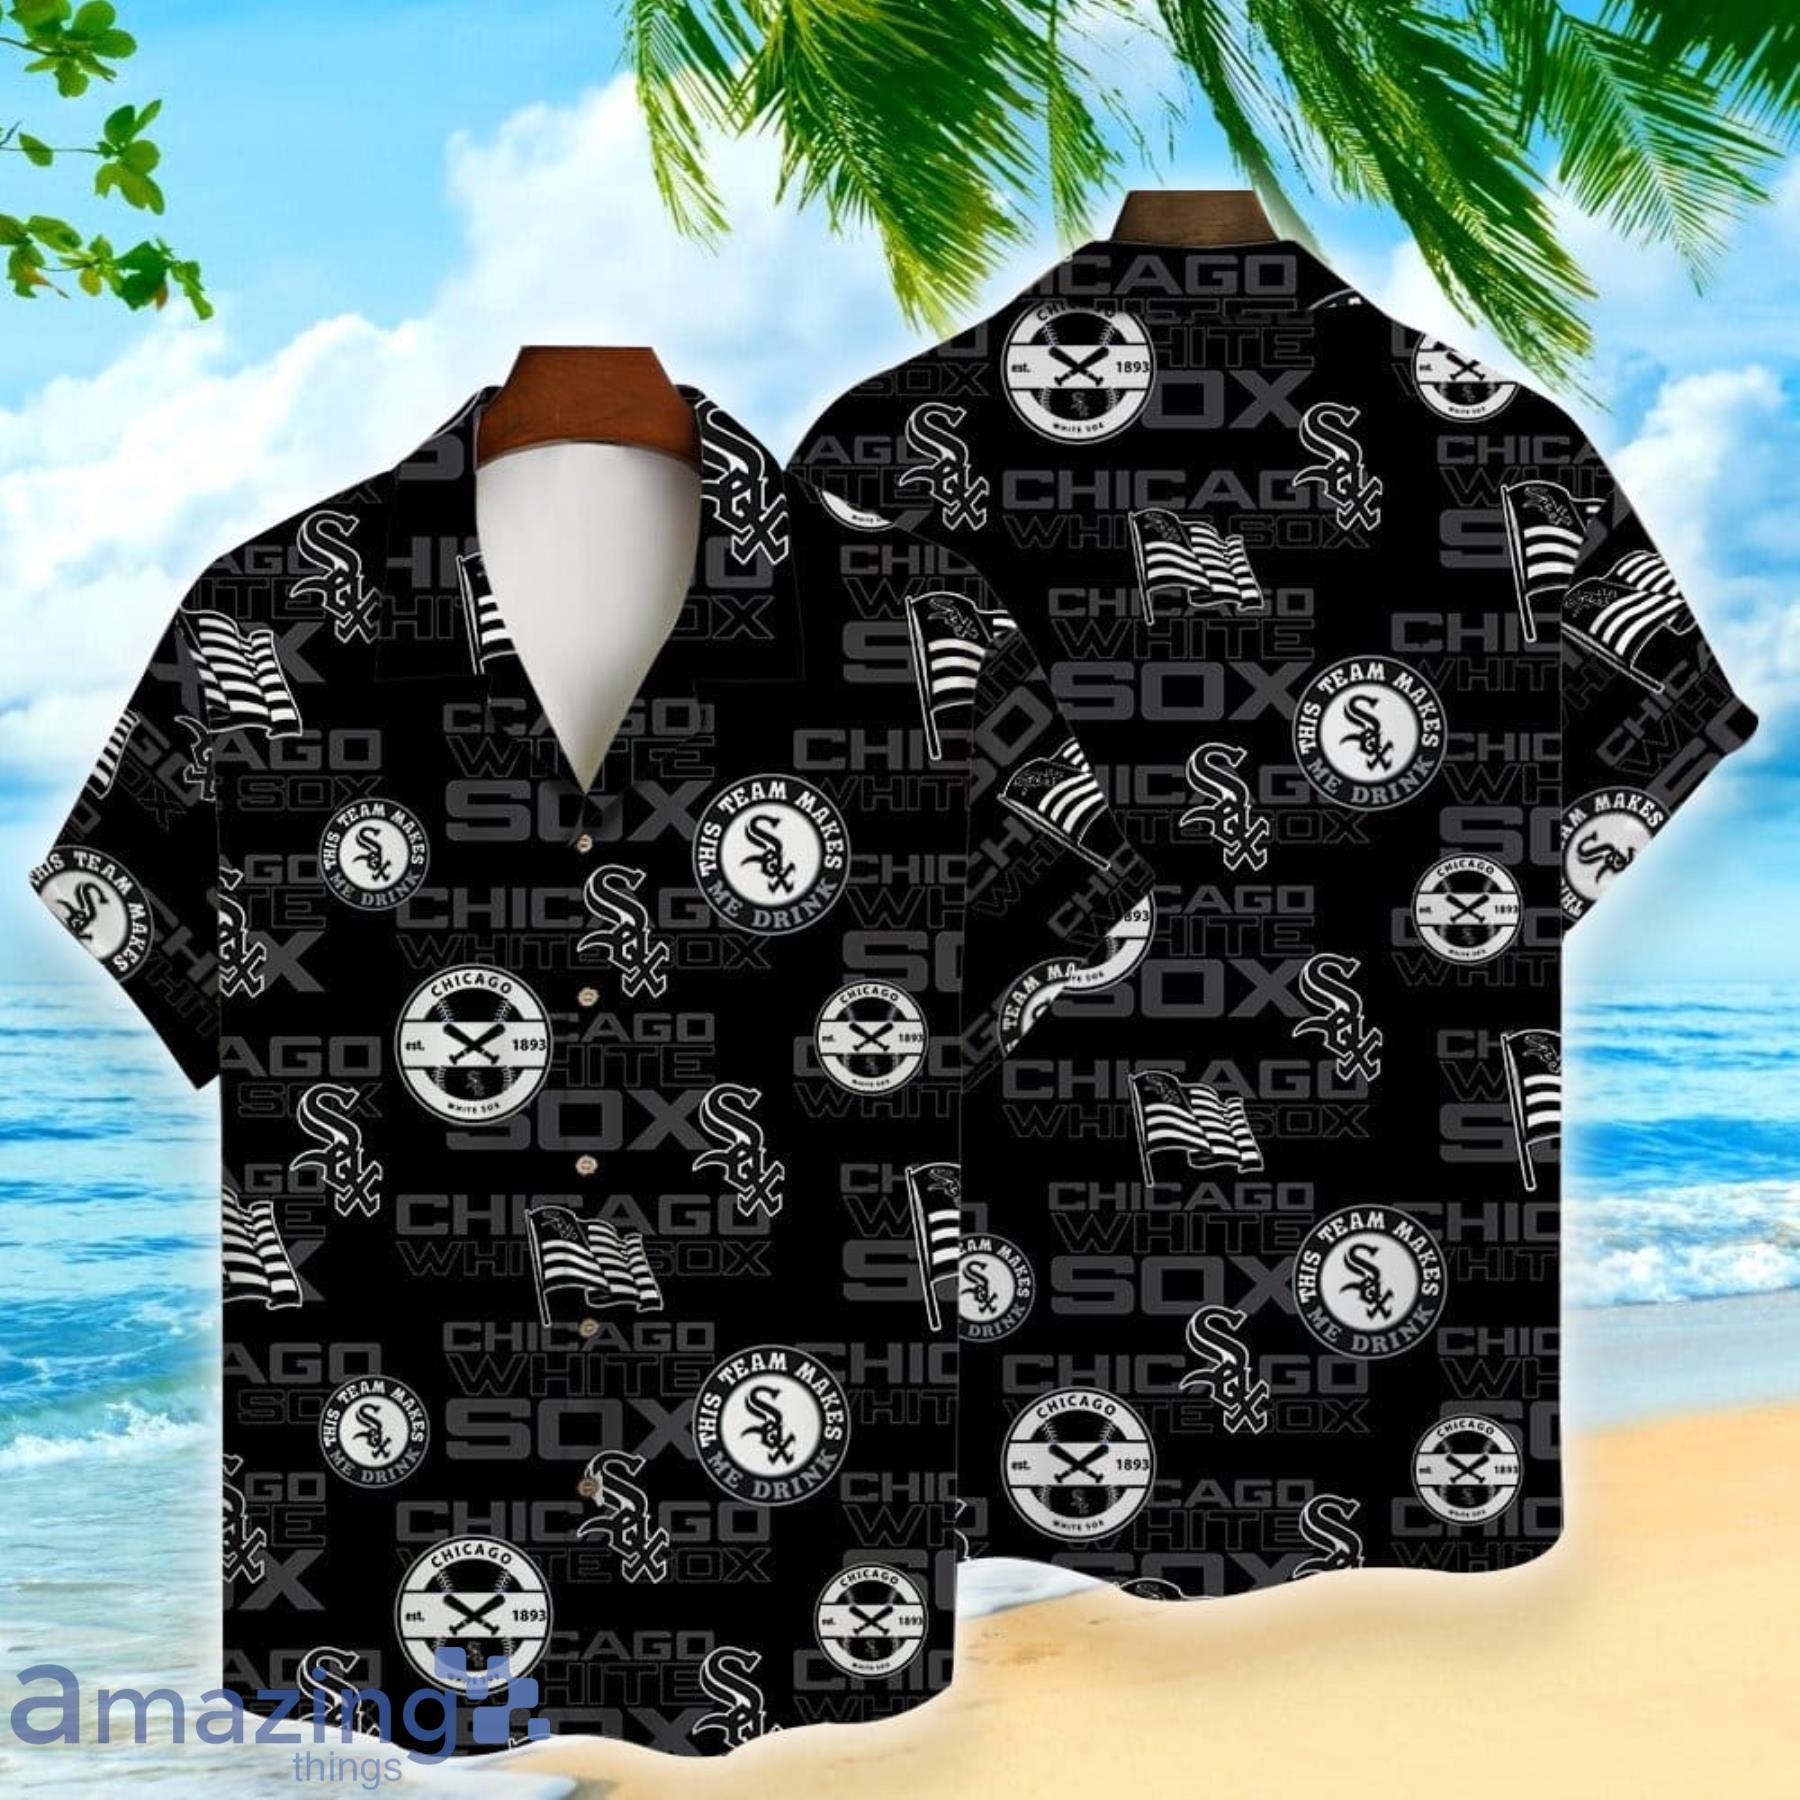 Chicago White Sox Major League Baseball 3d Print Hawaiian Shirt